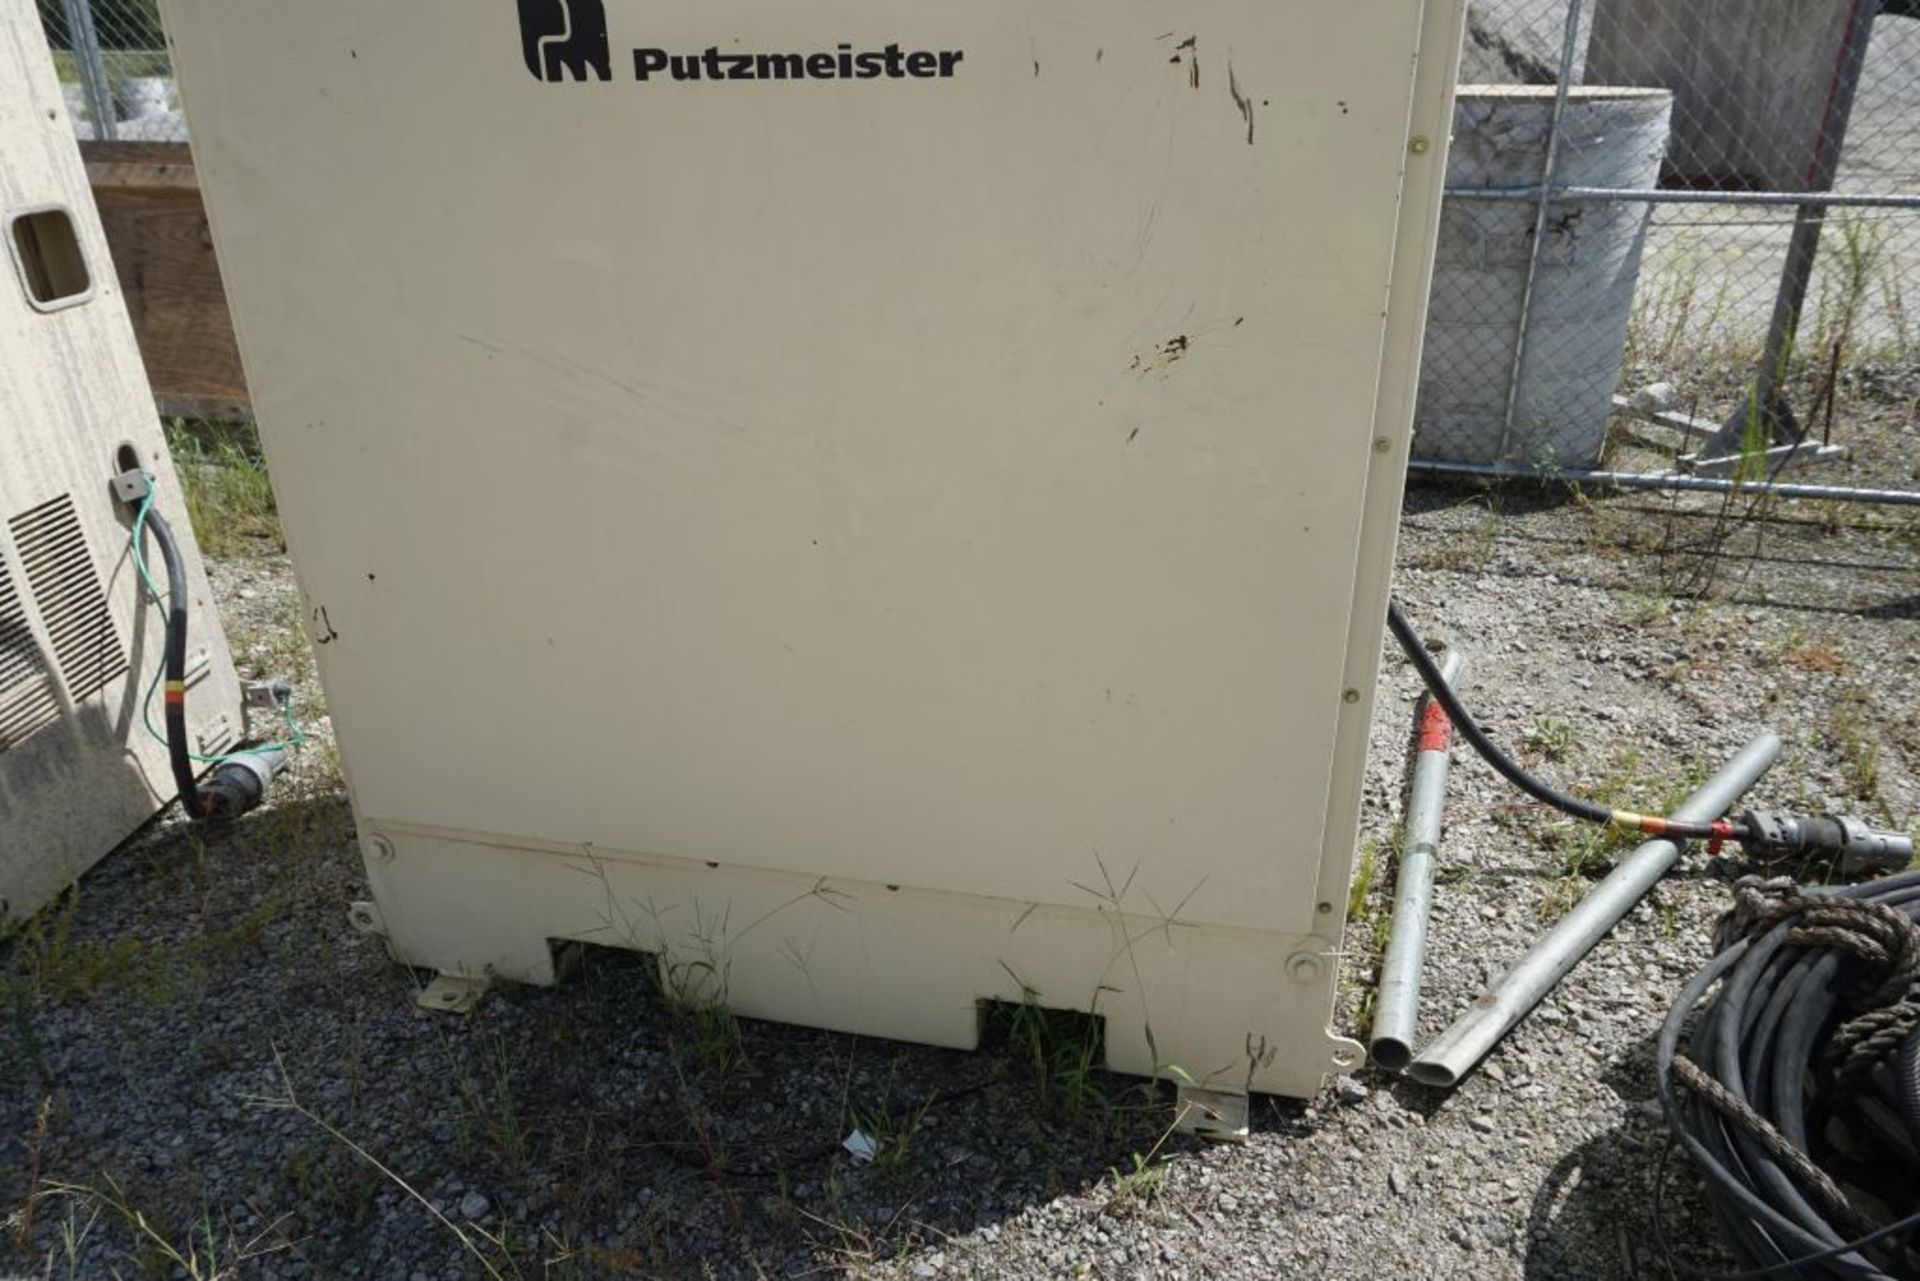 2019 Putzmeister Hydraulic Power Pack - Model No. HA 30 MXG42; Serial No. 400100809; 350 Bar; 1220 - Image 6 of 23